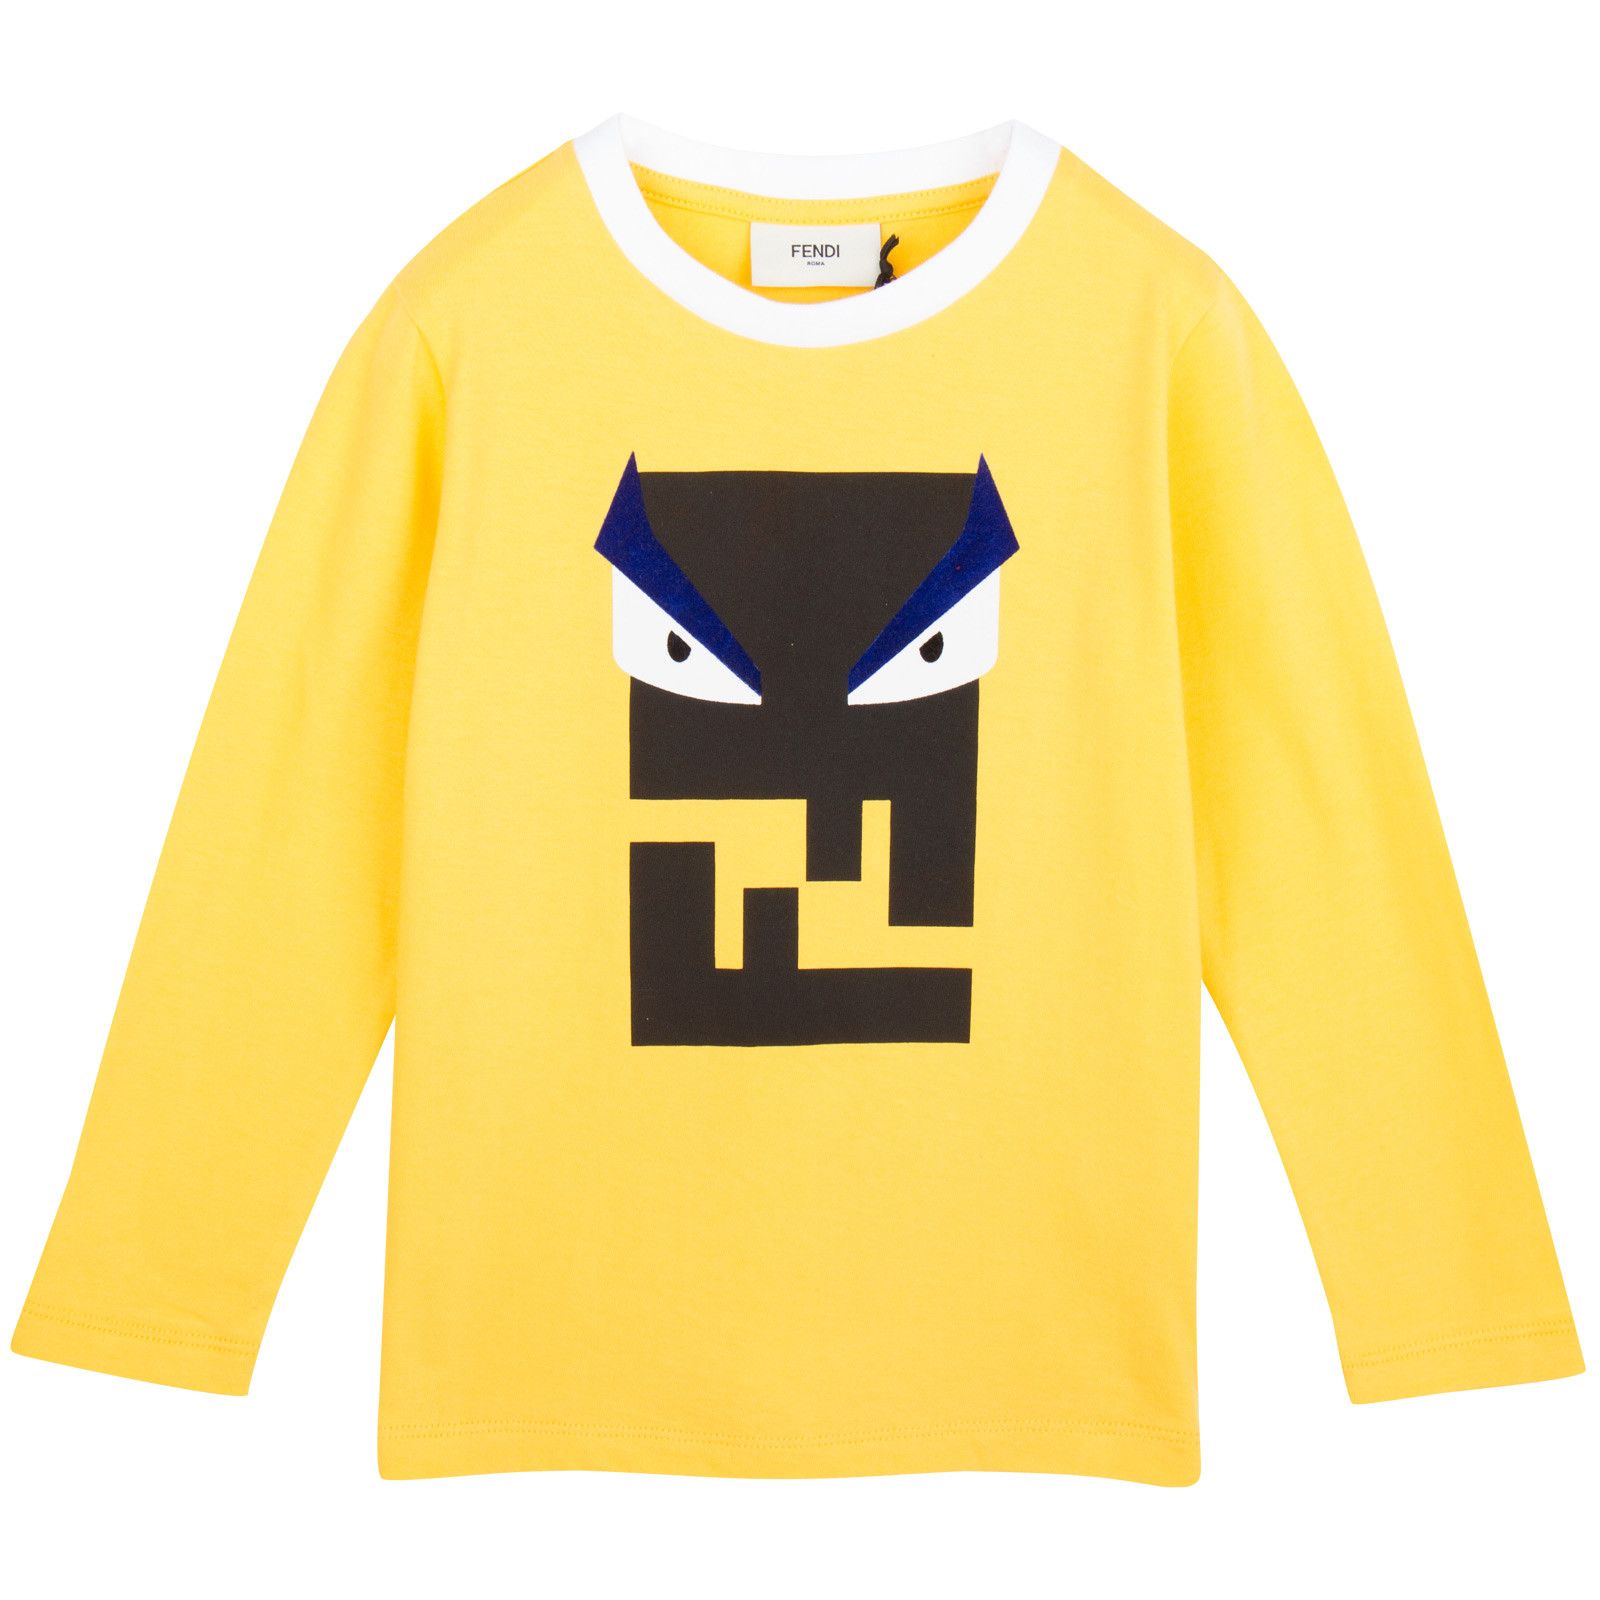 Boys Yellow Printed Monster Cotton T-Shirt - CÉMAROSE | Children's Fashion Store - 1